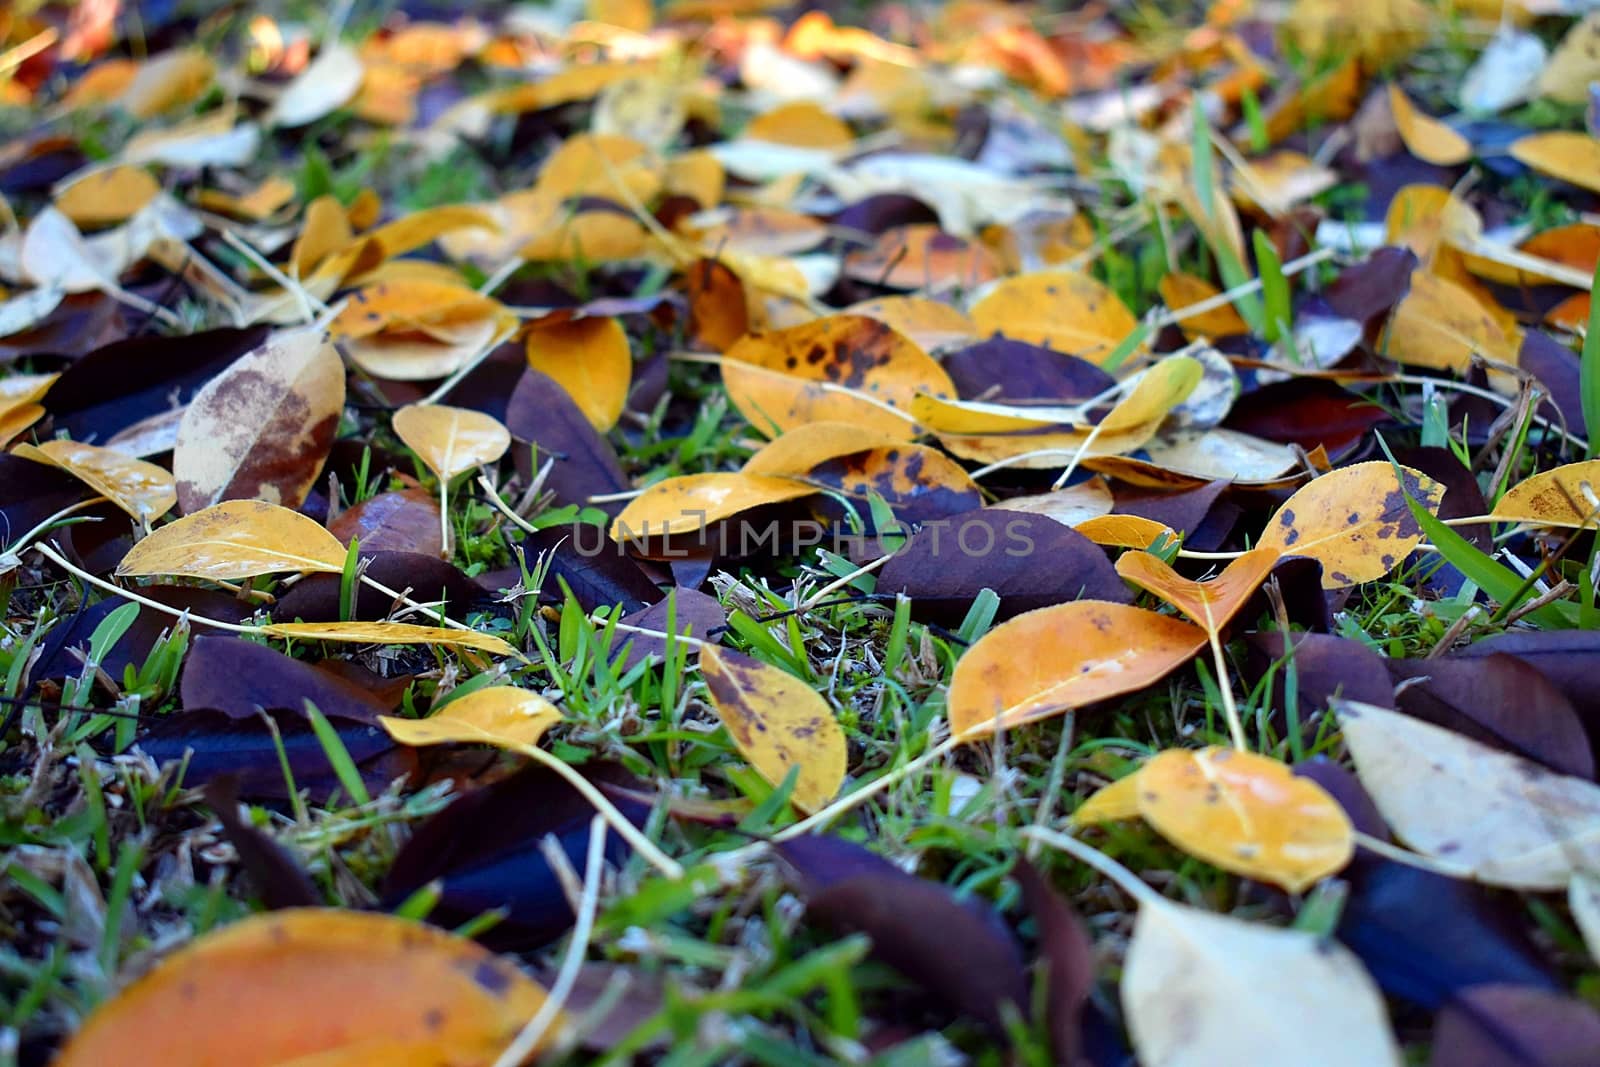 Autumn leaves fallen on the ground